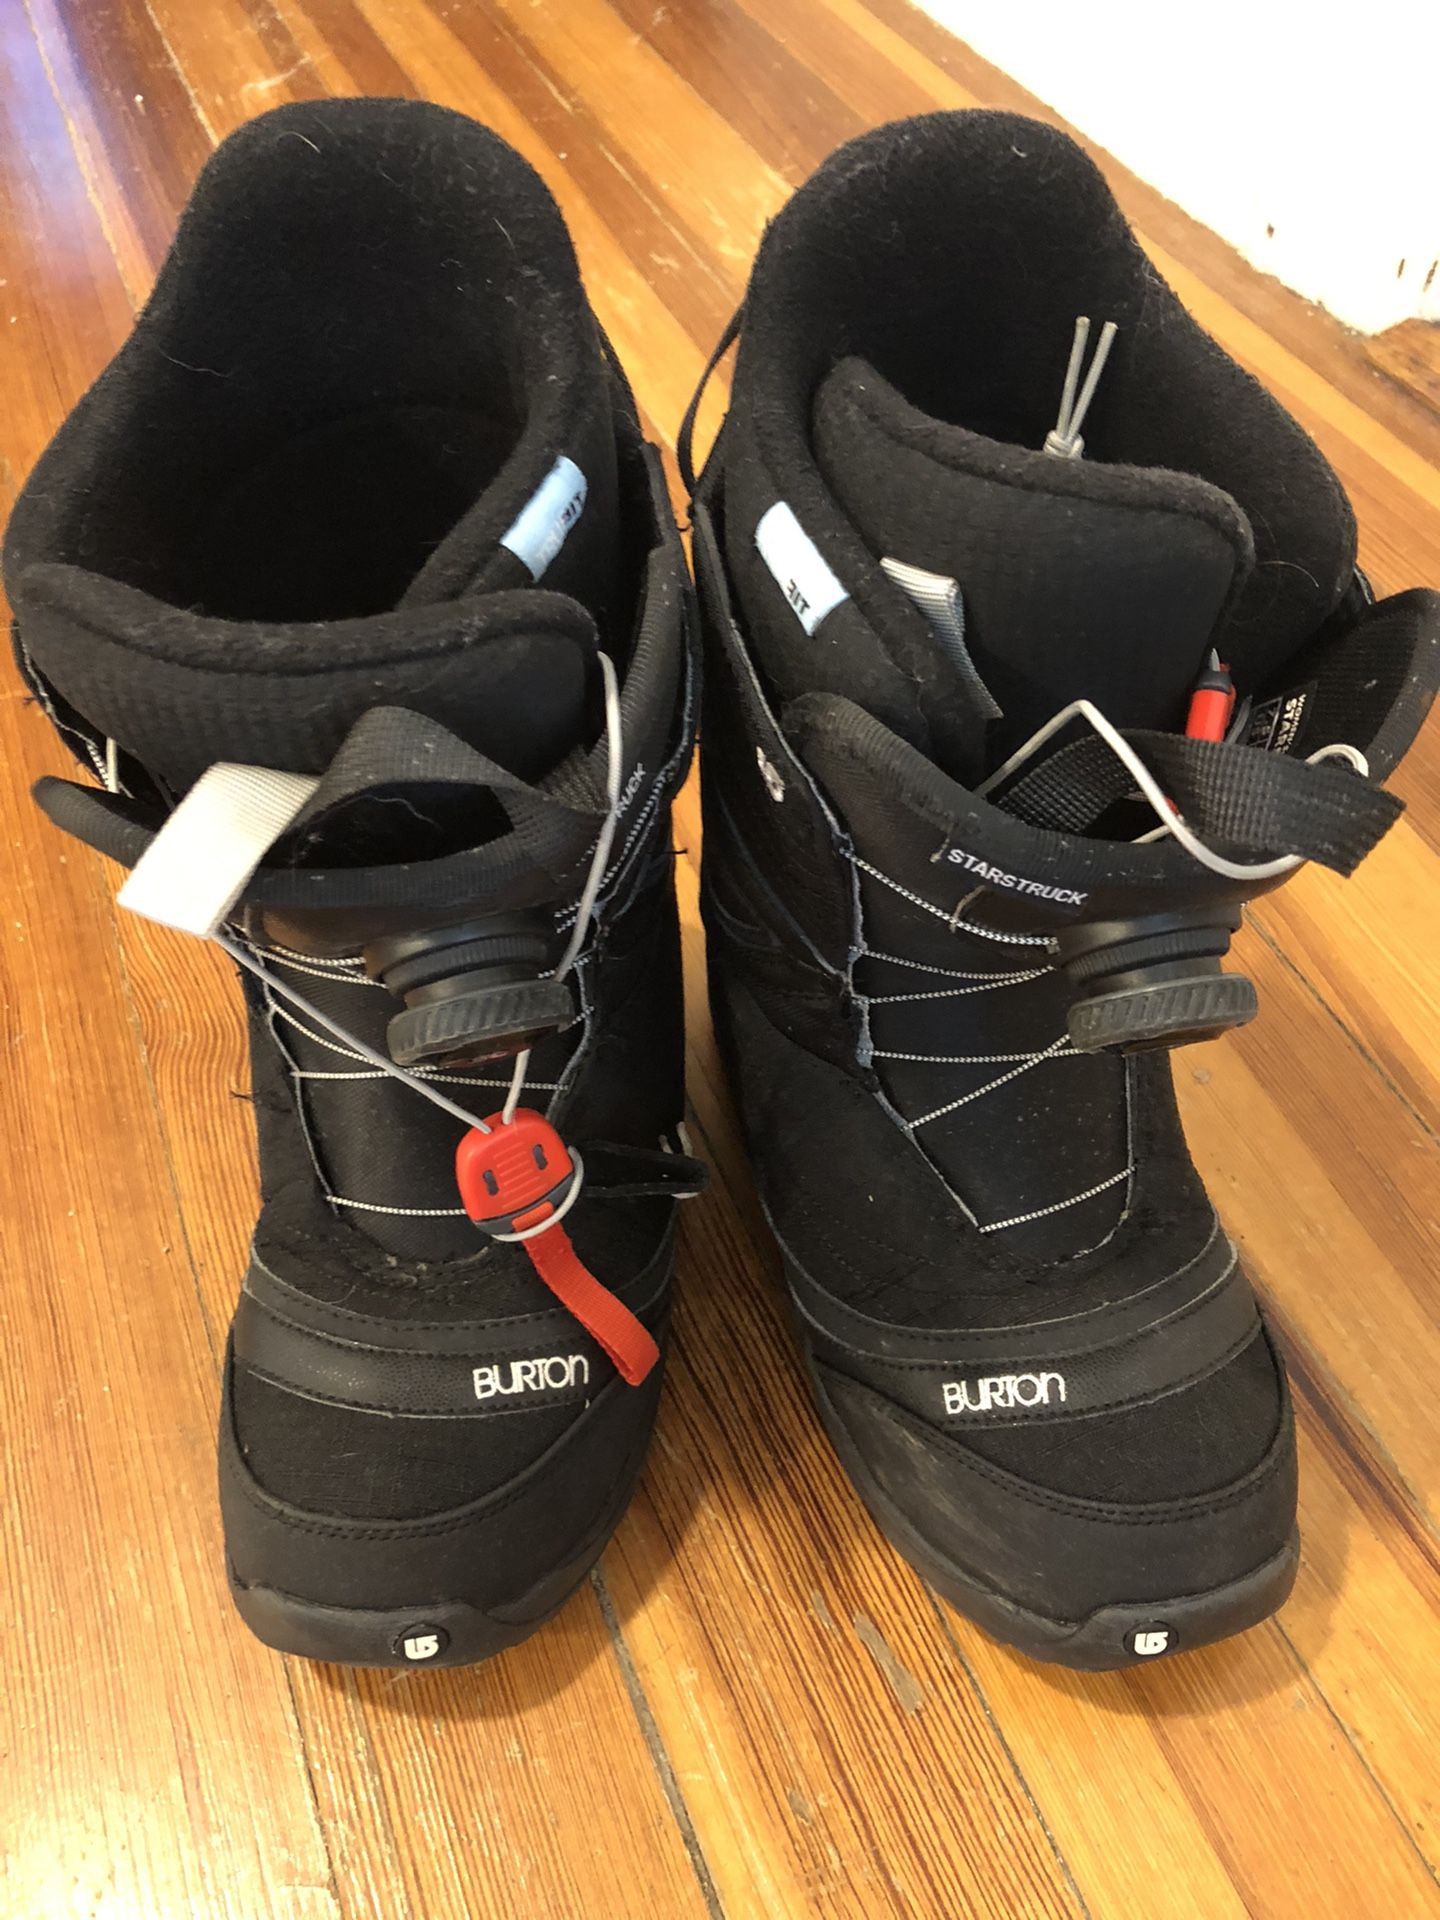 Burton Snowboard Boots - Size 7.5 Women’s